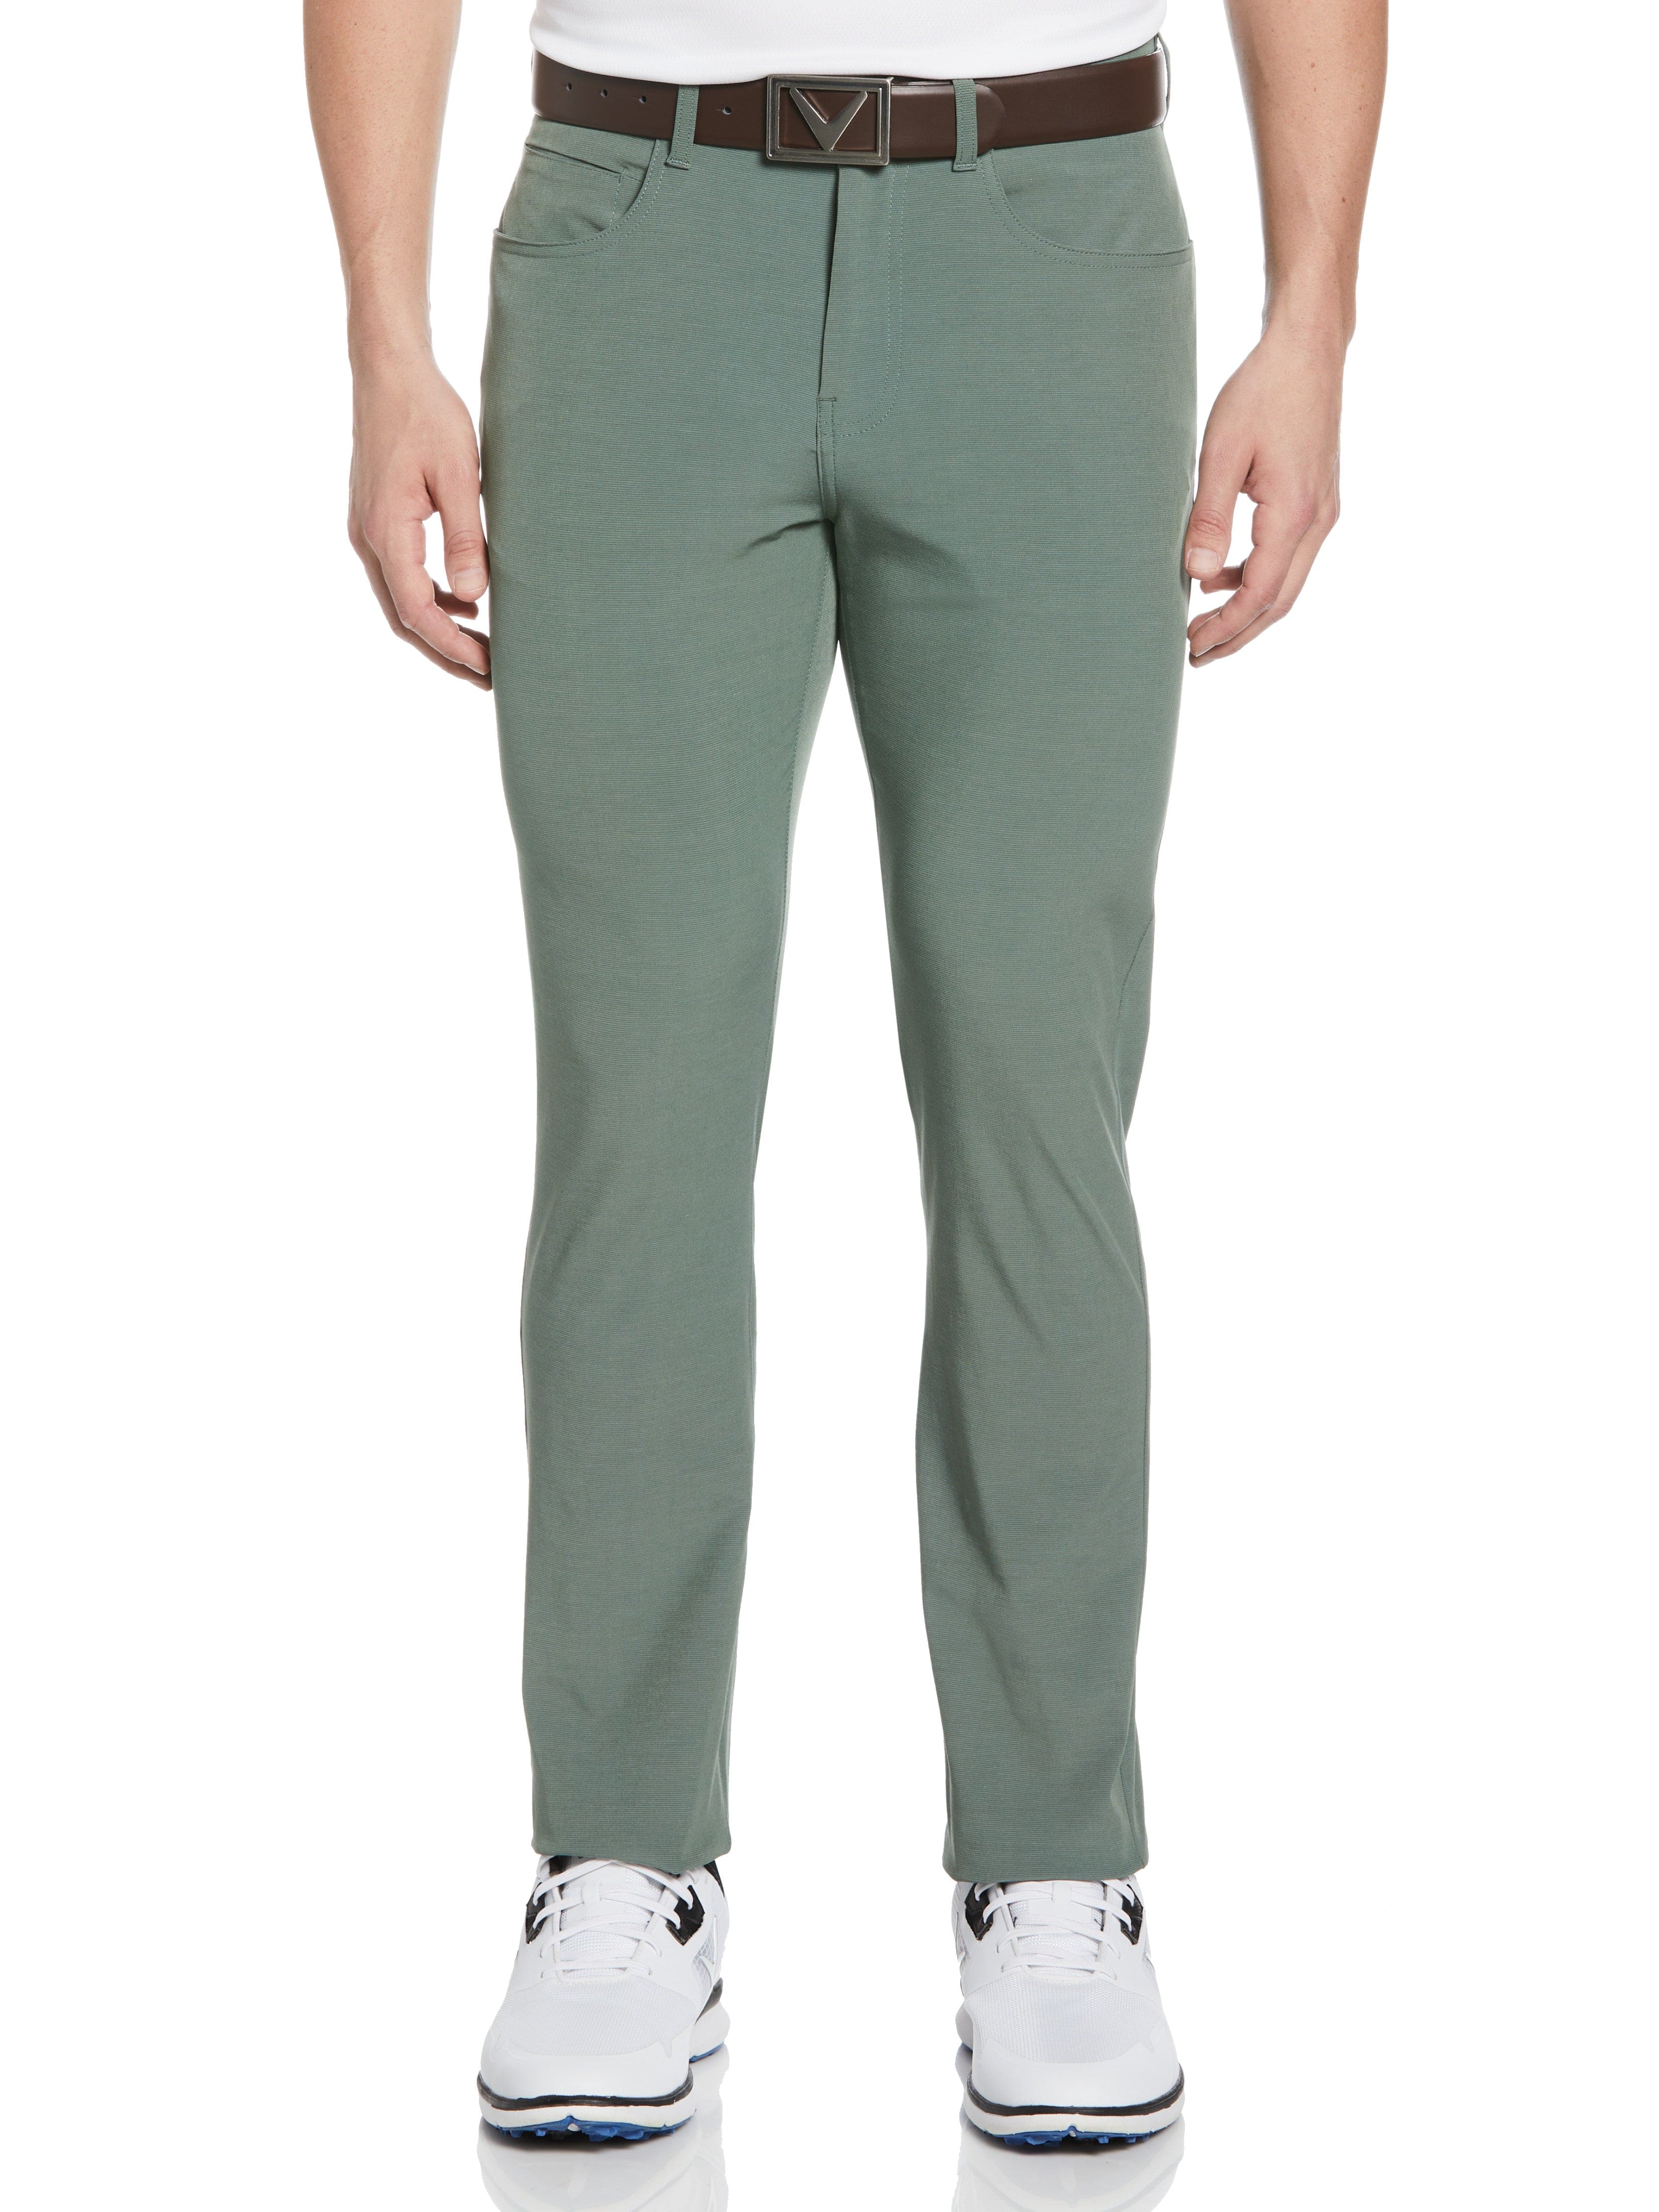 Buy ZARA MAN Men's White 5 Pocket Skinny Sueded Cotton Stretch Golf Pants  (36/32) at